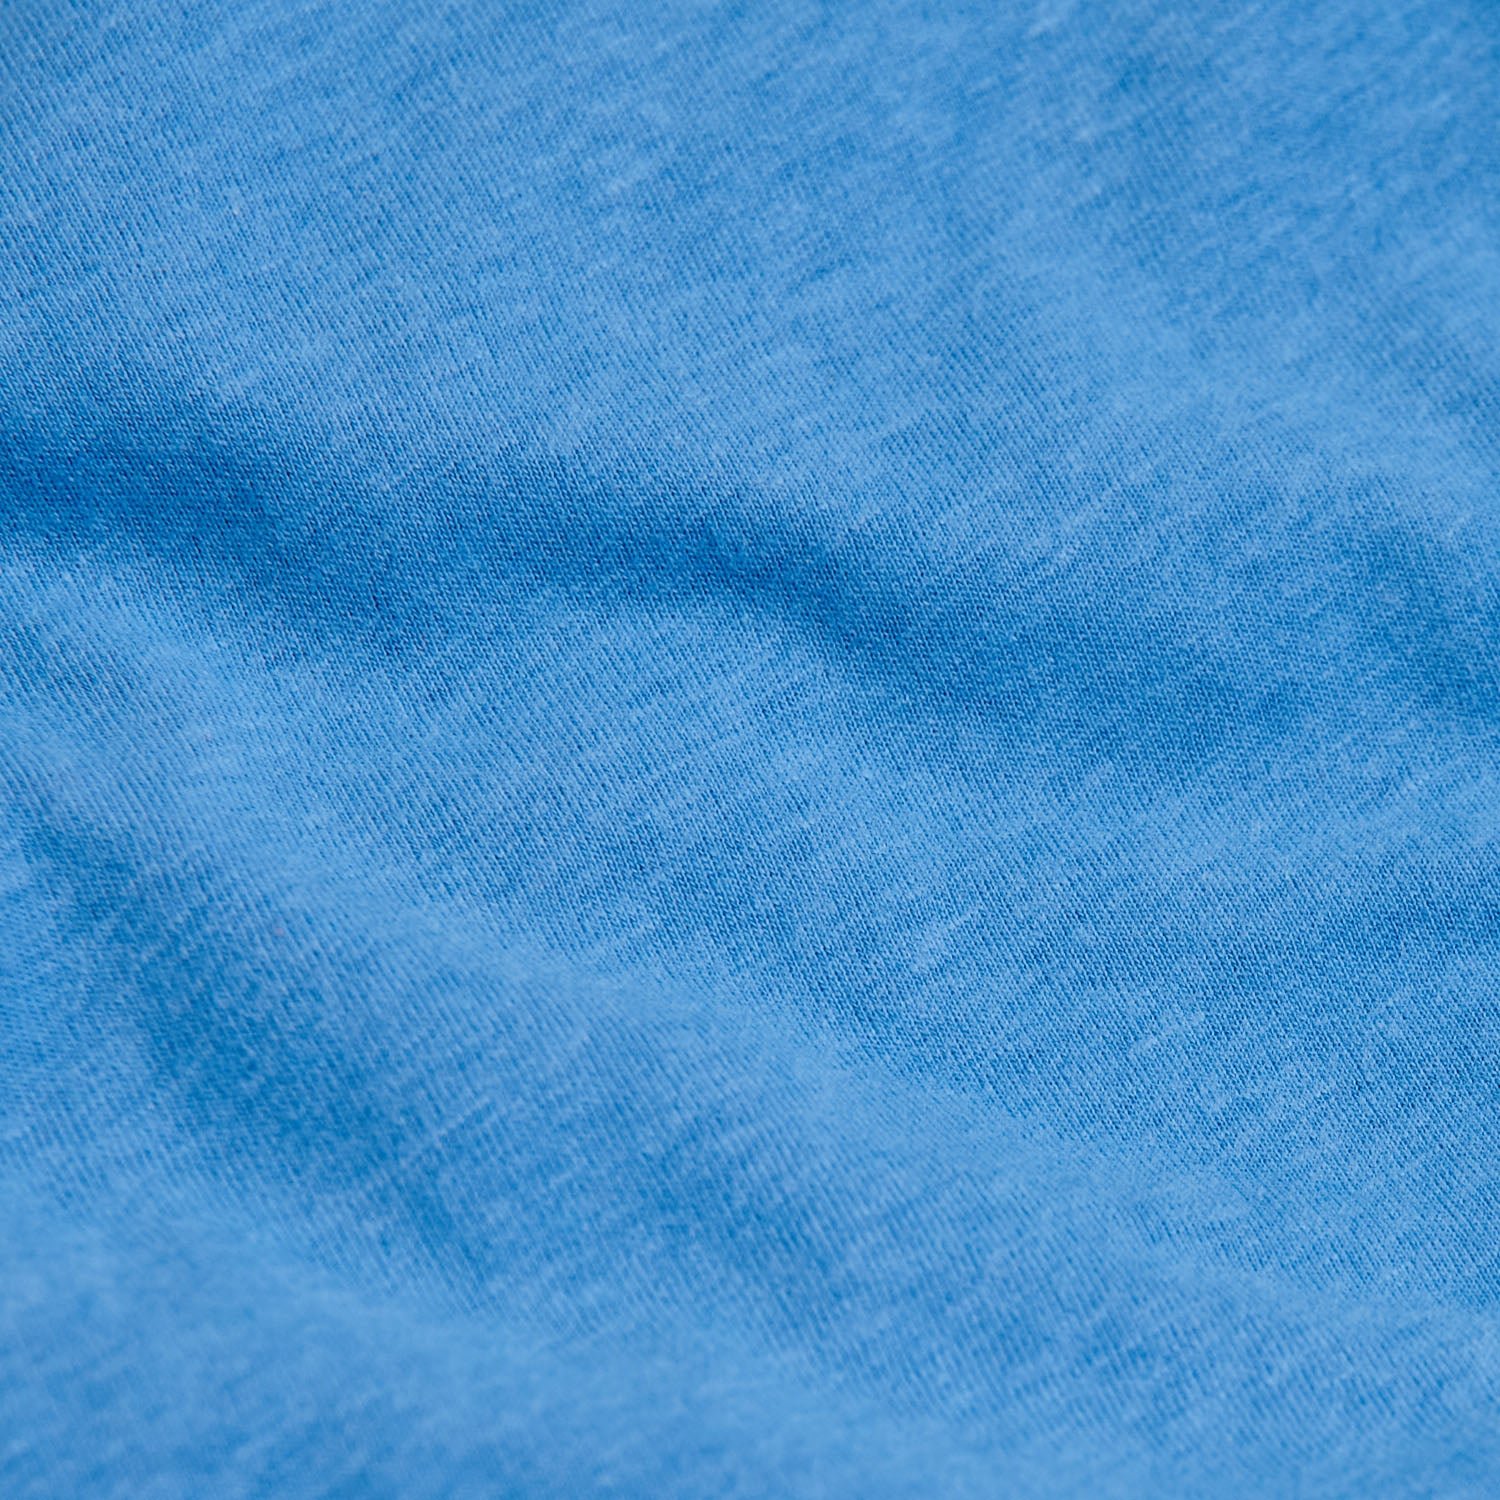 Periwinkle Blue V-Neck T-Shirt